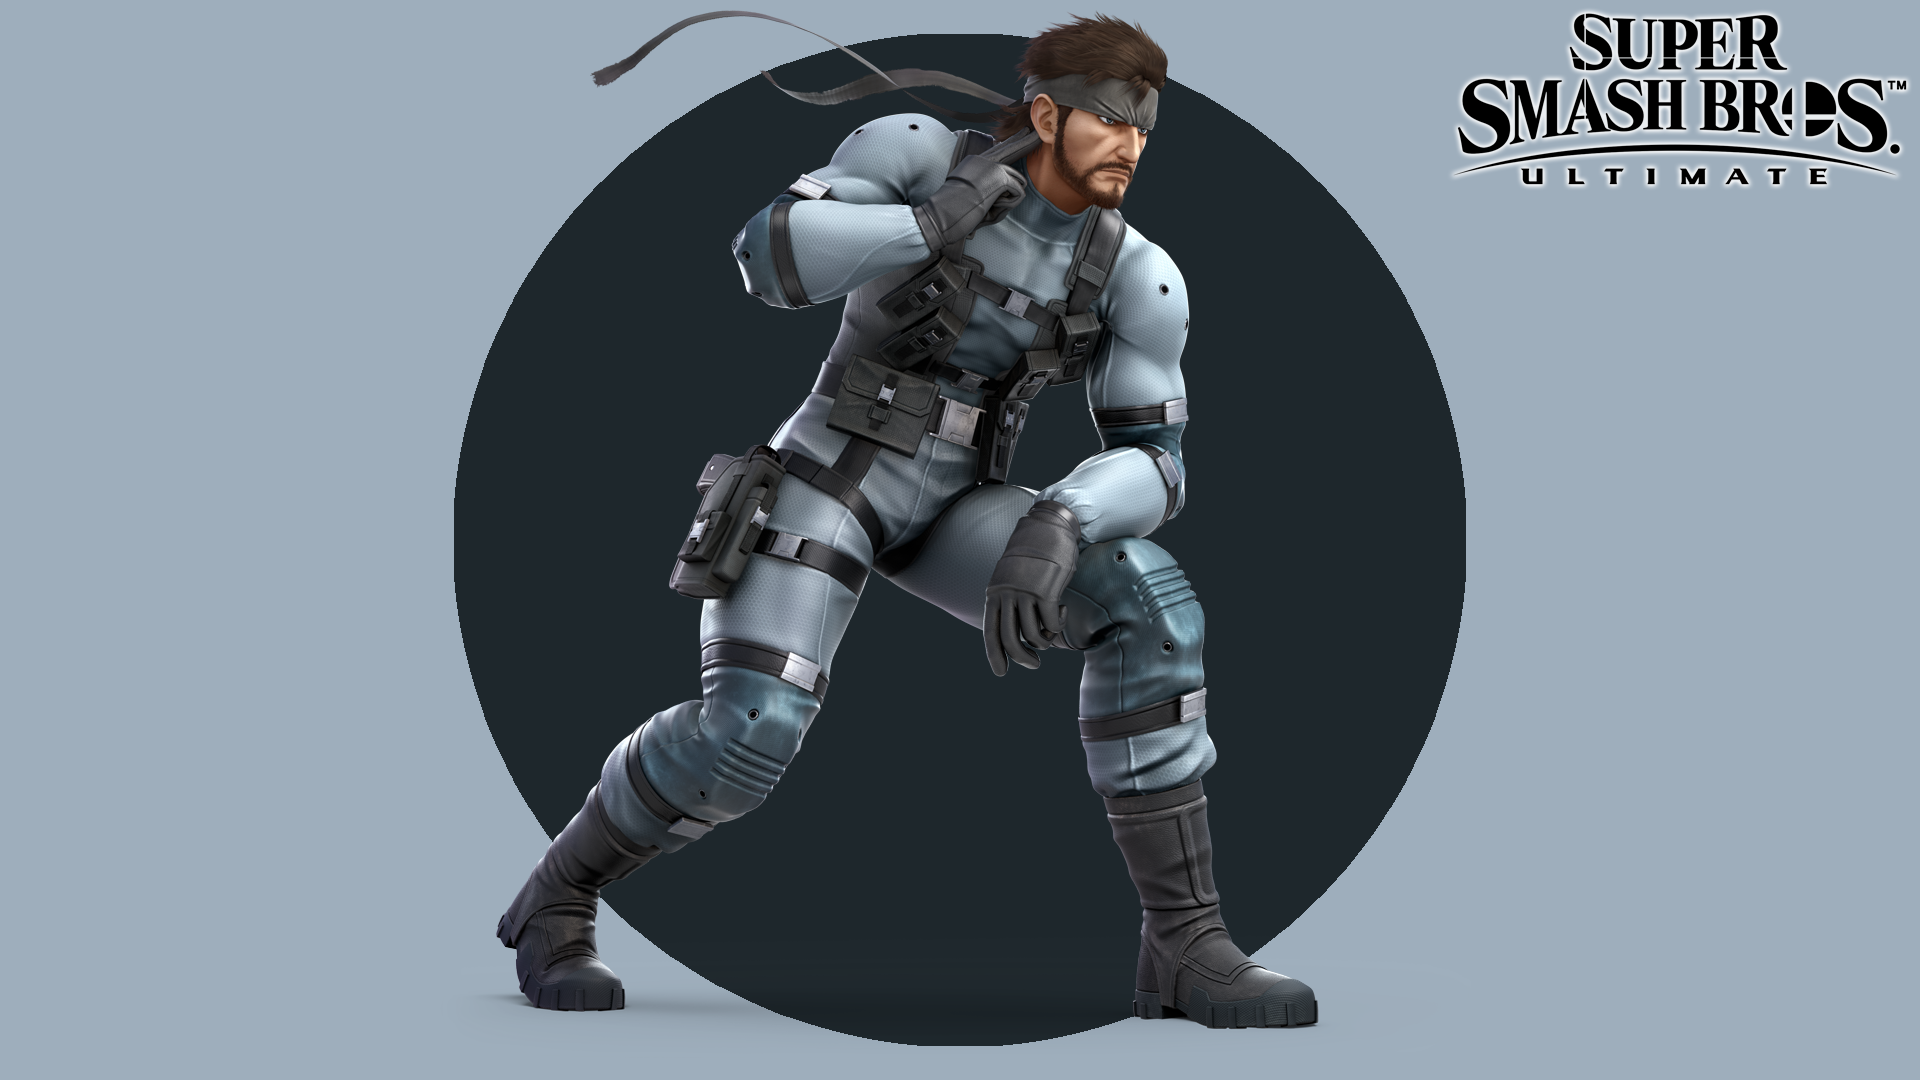 Metal Gear Solid Solid Snake Super Smash Bros Ultimate 1920x1080